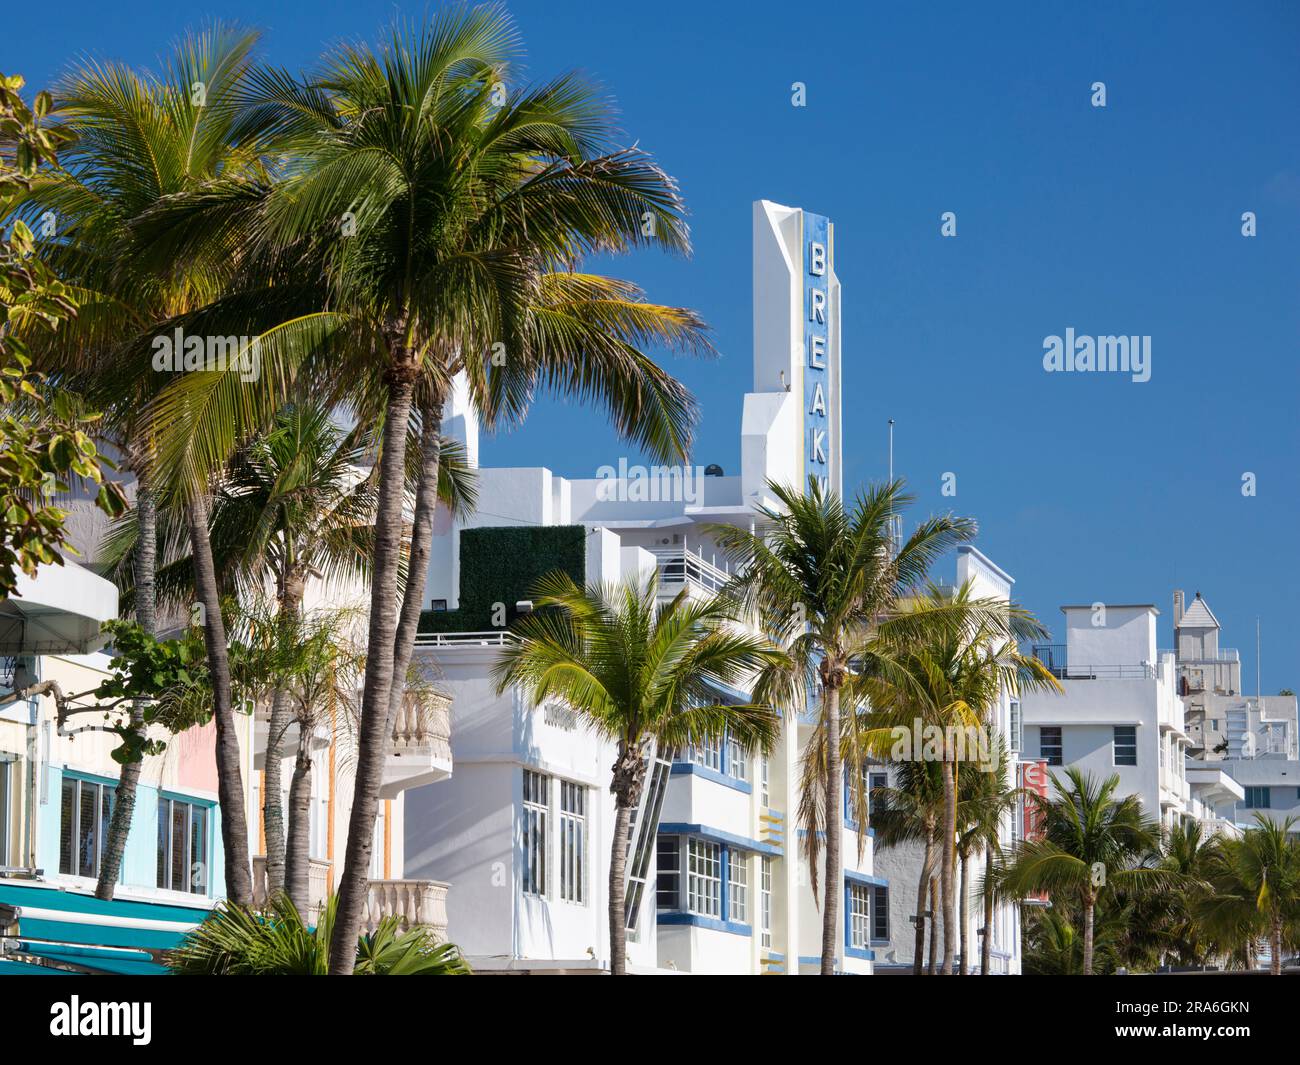 Miami Beach, Florida, USA. Hotel facades and towering palm trees, Ocean Drive, Miami Beach Architectural District, South Beach. Stock Photo